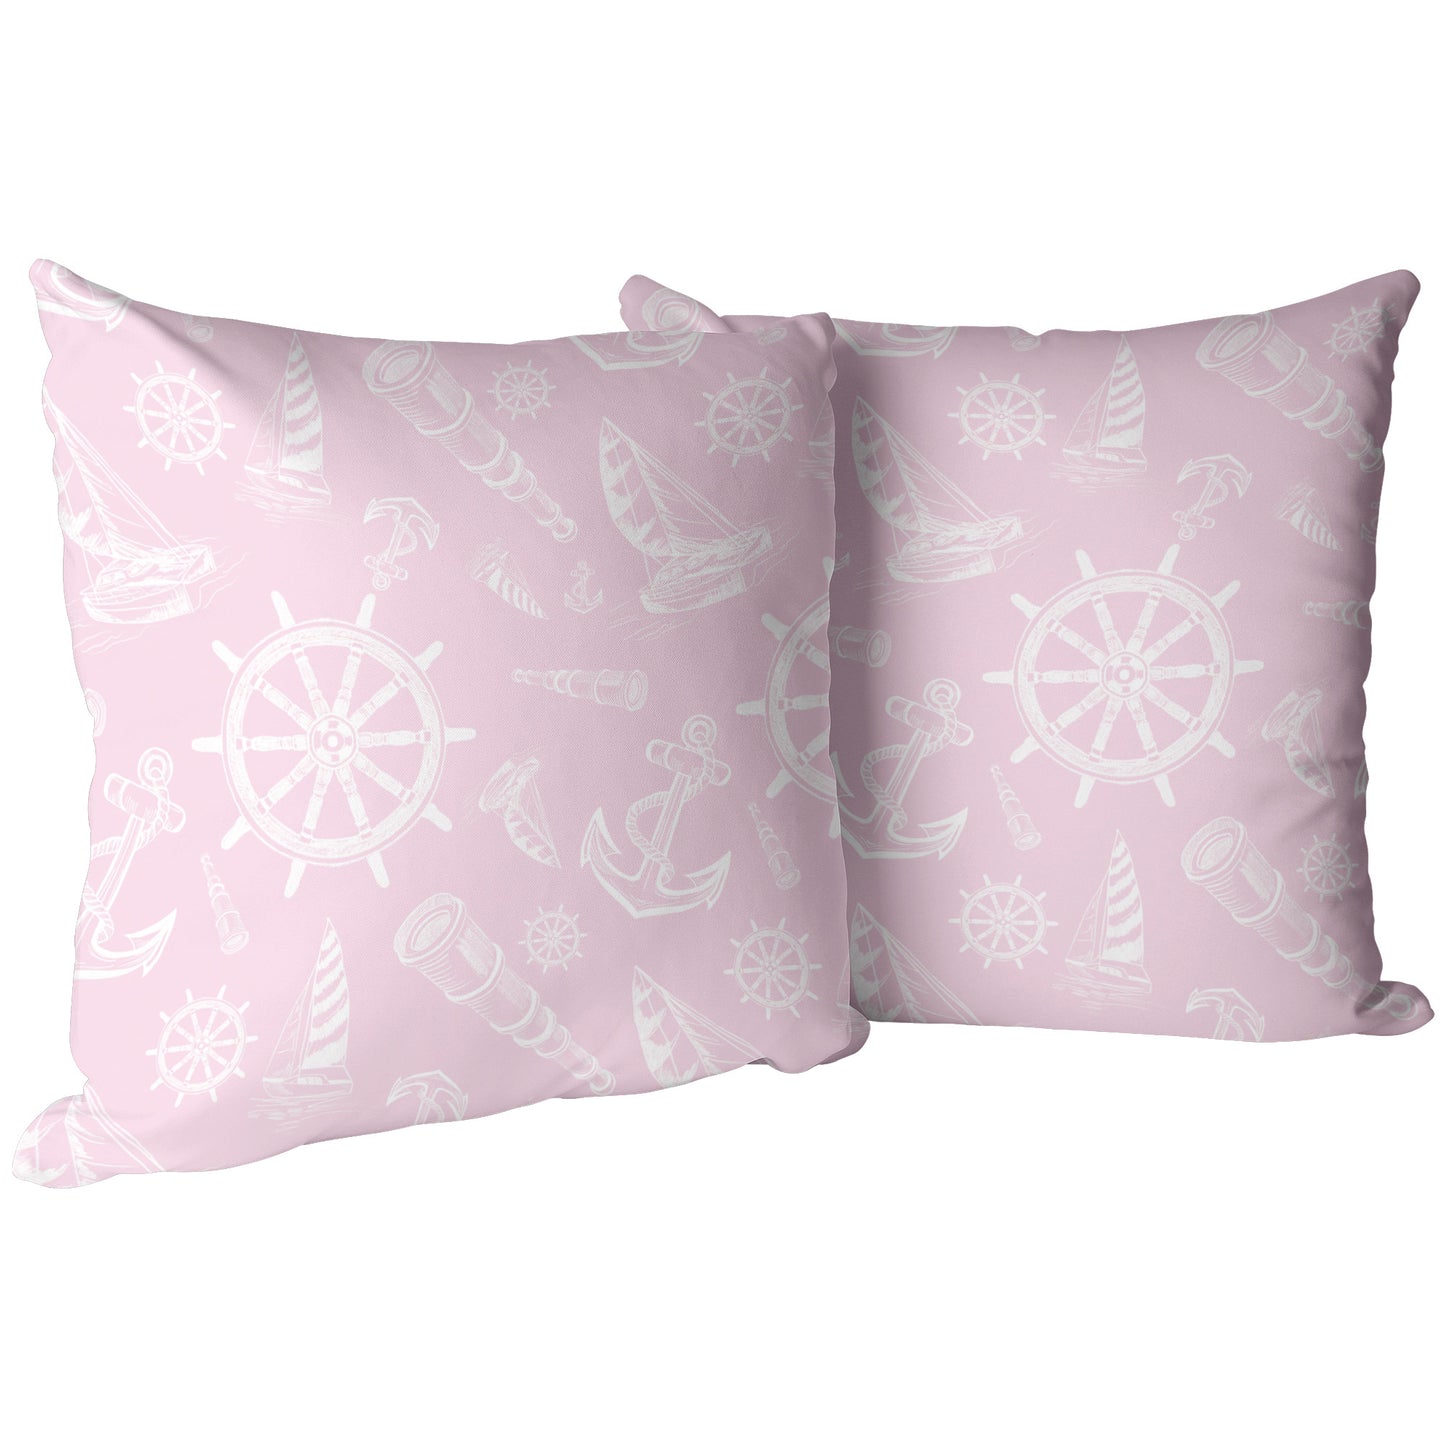 Nautical Sketches Design on Pink Background, Throw Pillow